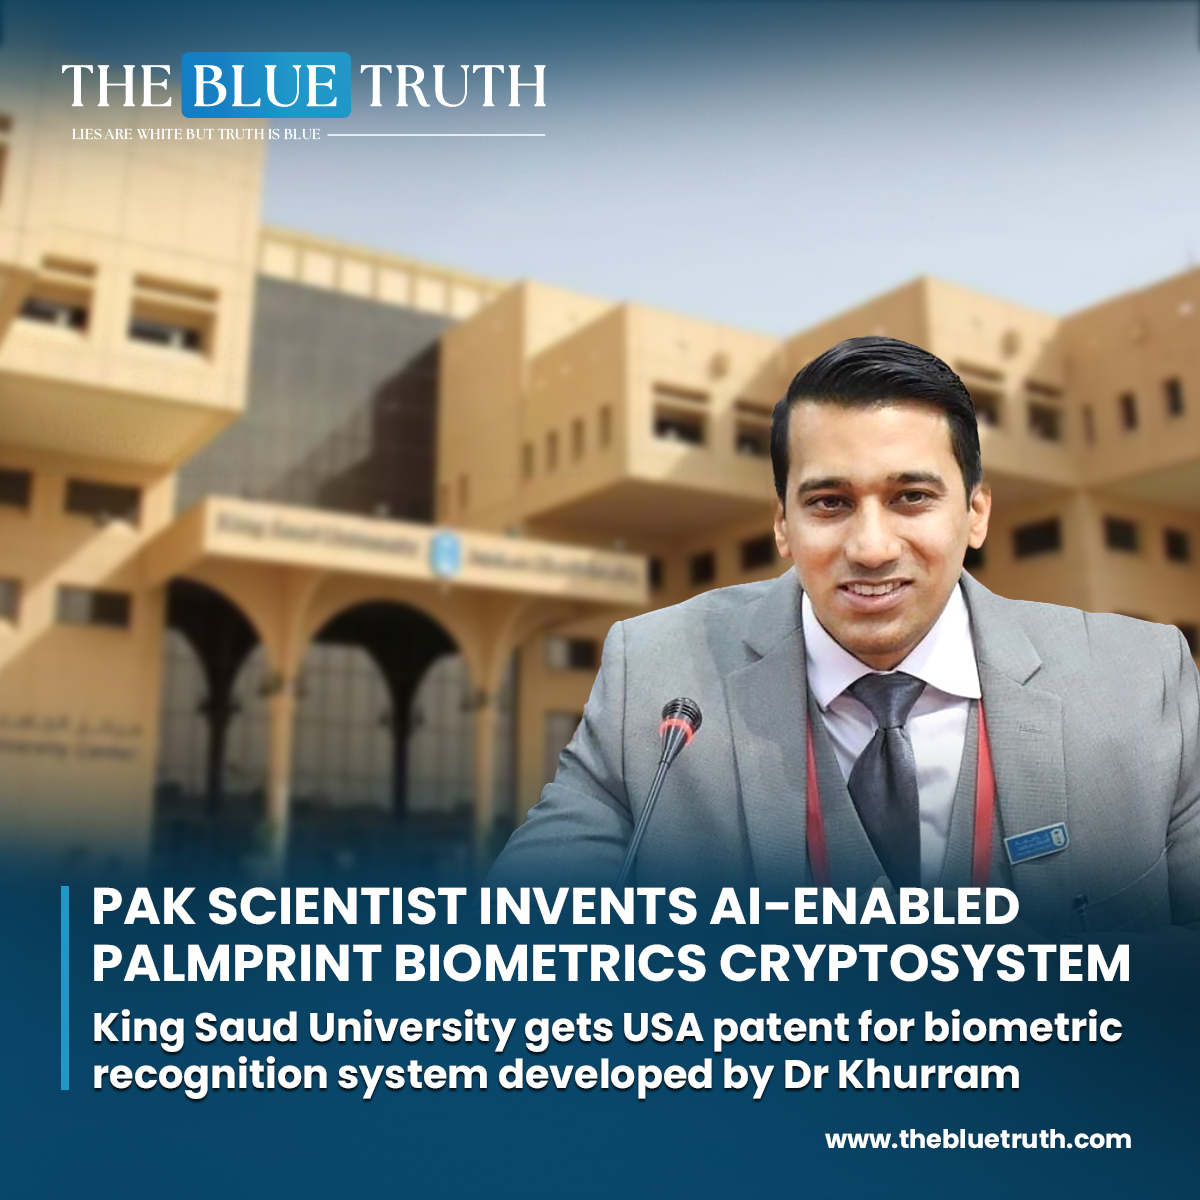 King Saud University gets U.S. patent for revolutionary biometric recognition system developed by Dr Khurram Khan.
#AIBiometrics #PalmprintCryptosystem #PakistaniInnovation #ScienceAndTechnology
#BiometricSecurity #AIInnovation #TechBreakthrough #tbt #TheBlueTruth